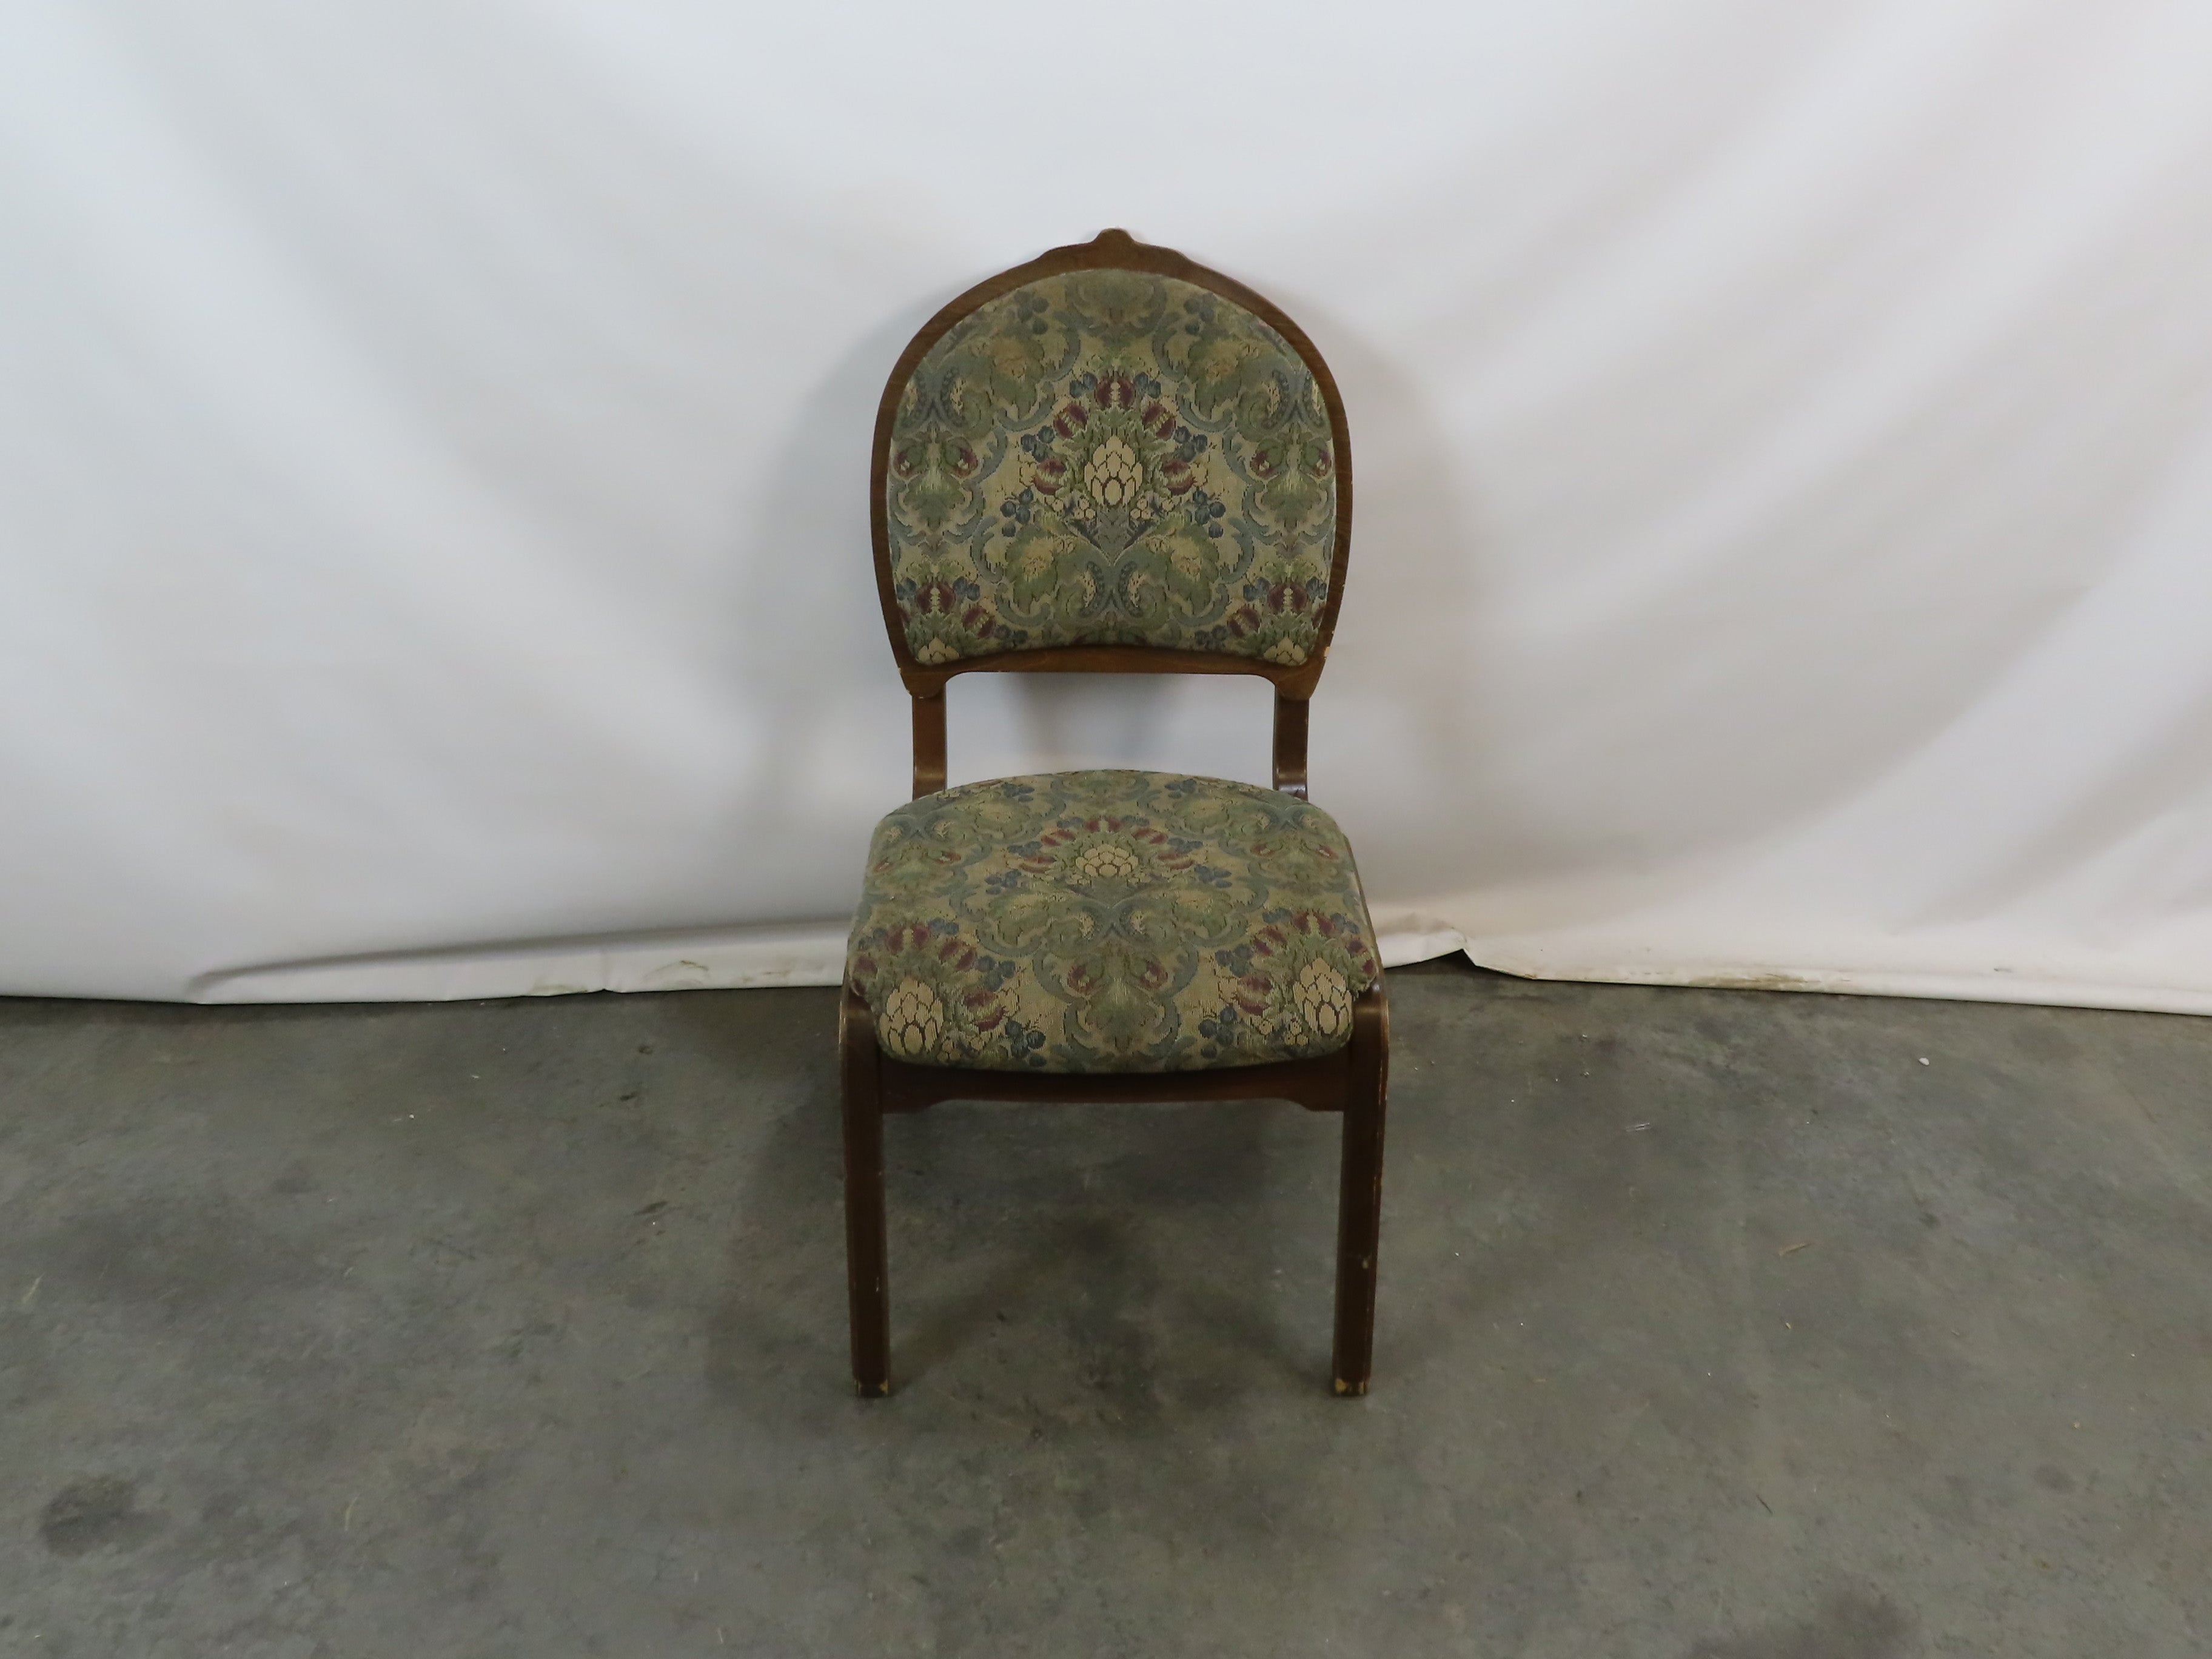 Sauder Manufacturing Co. Vintage Patterned Chair